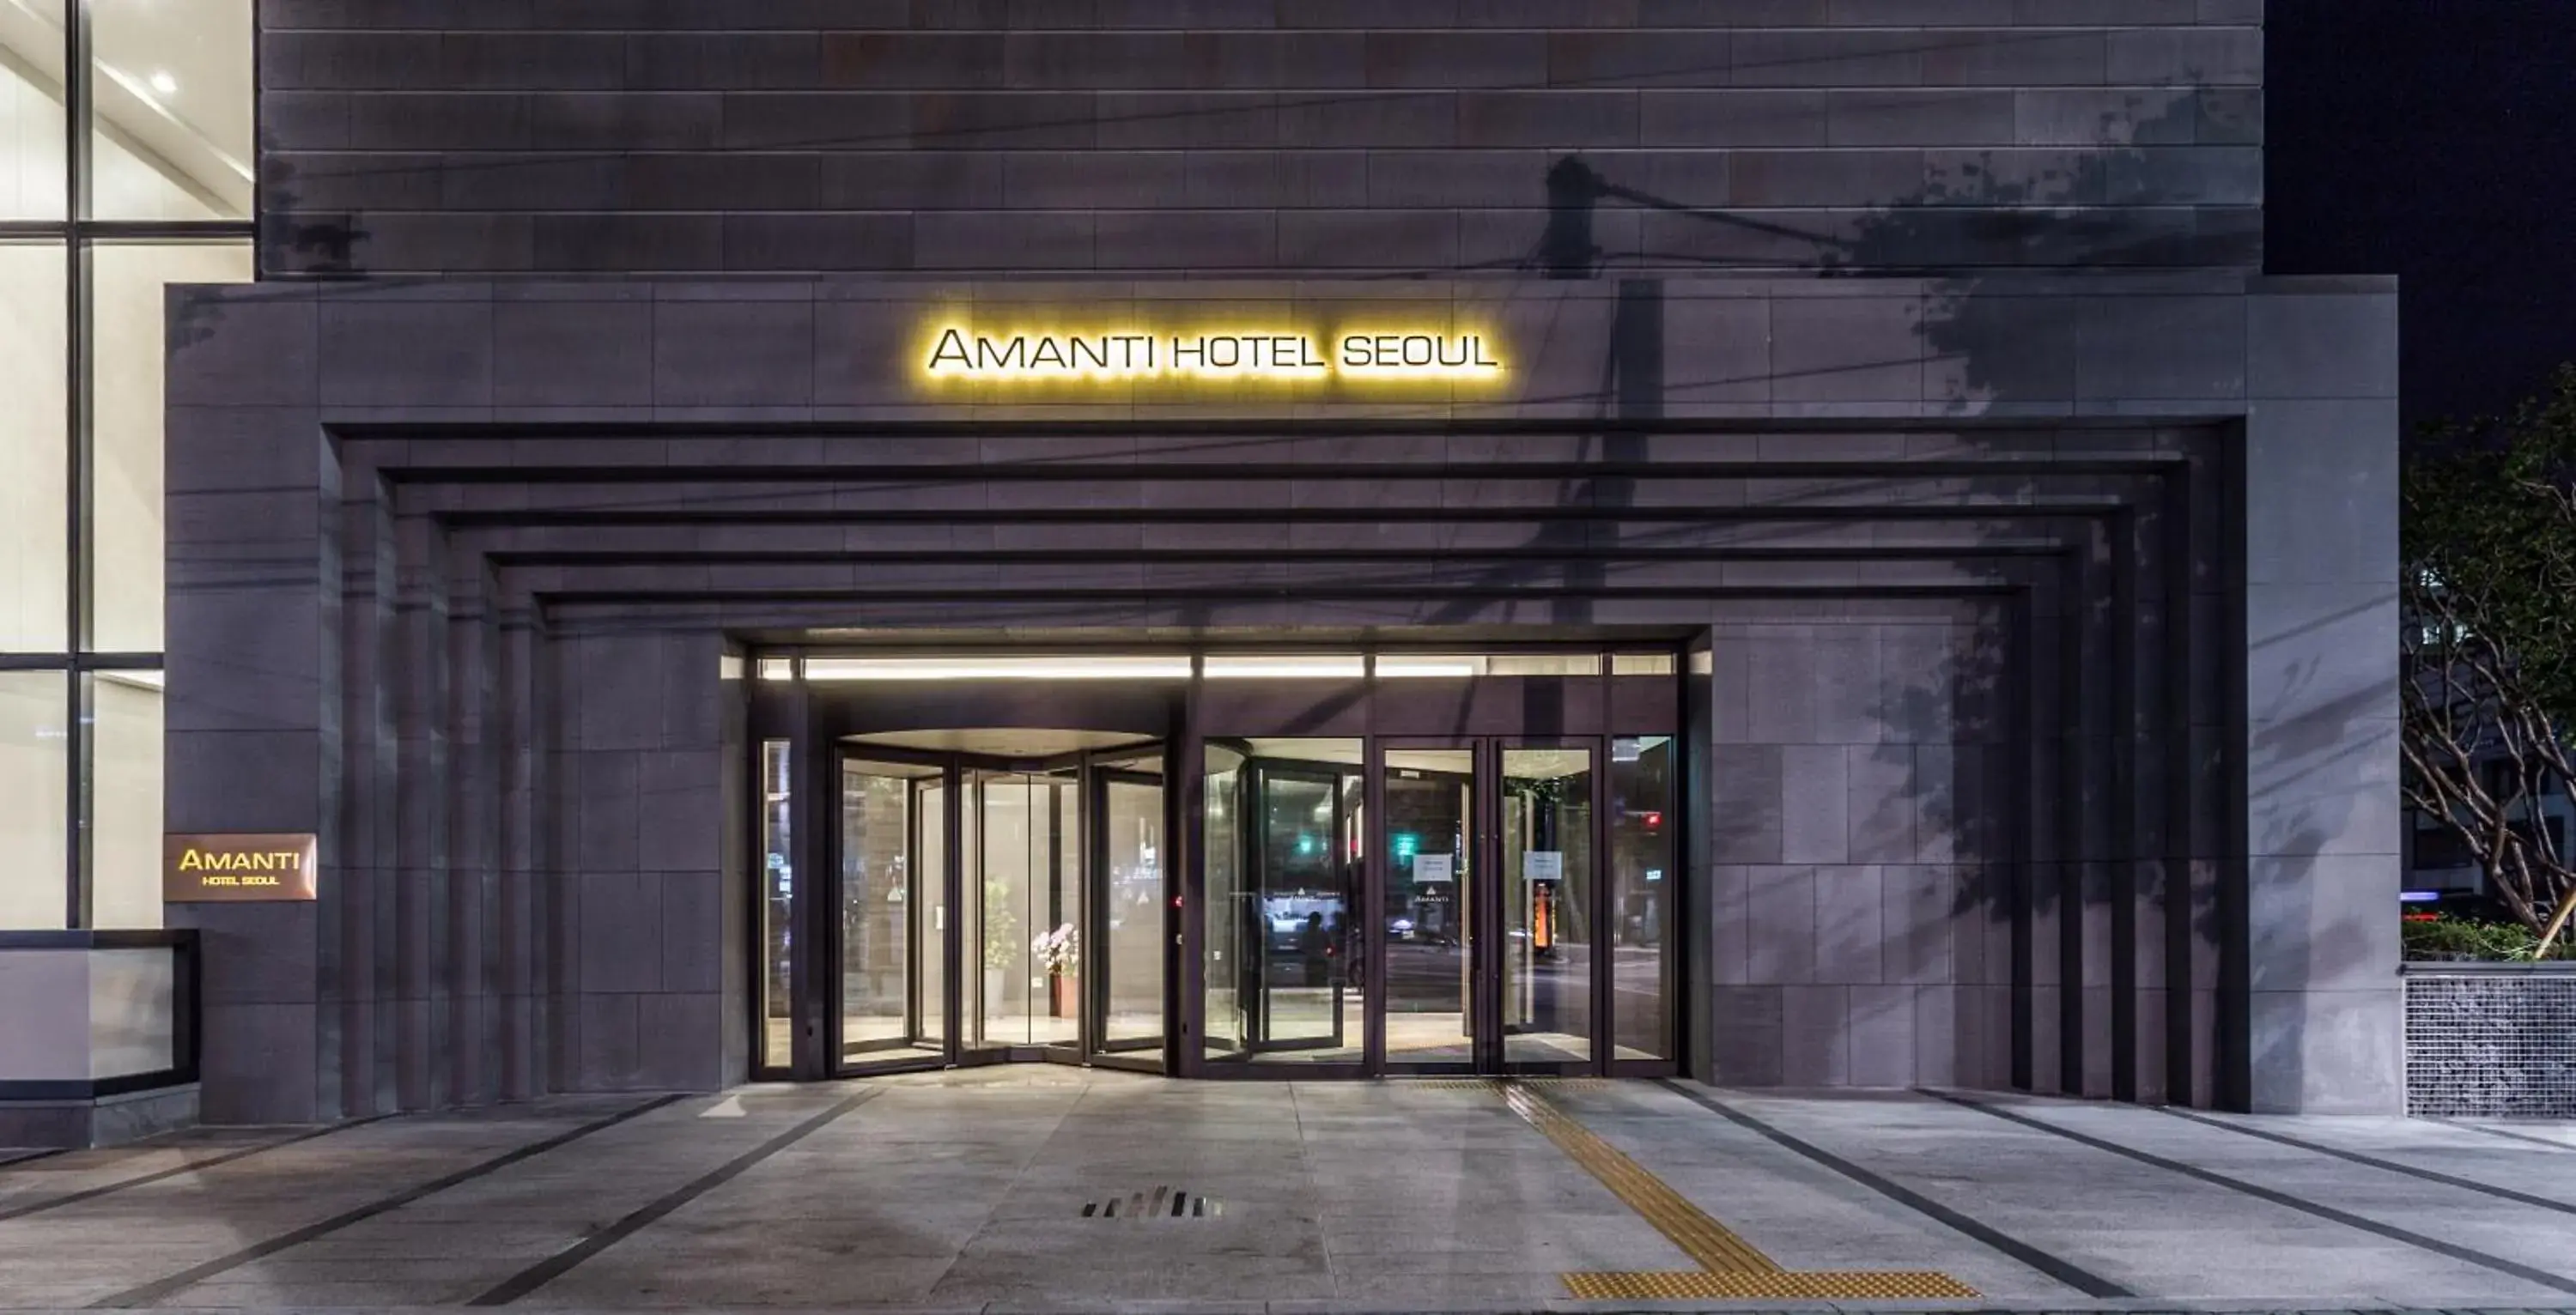 Property building, Facade/Entrance in Amanti Hotel Seoul